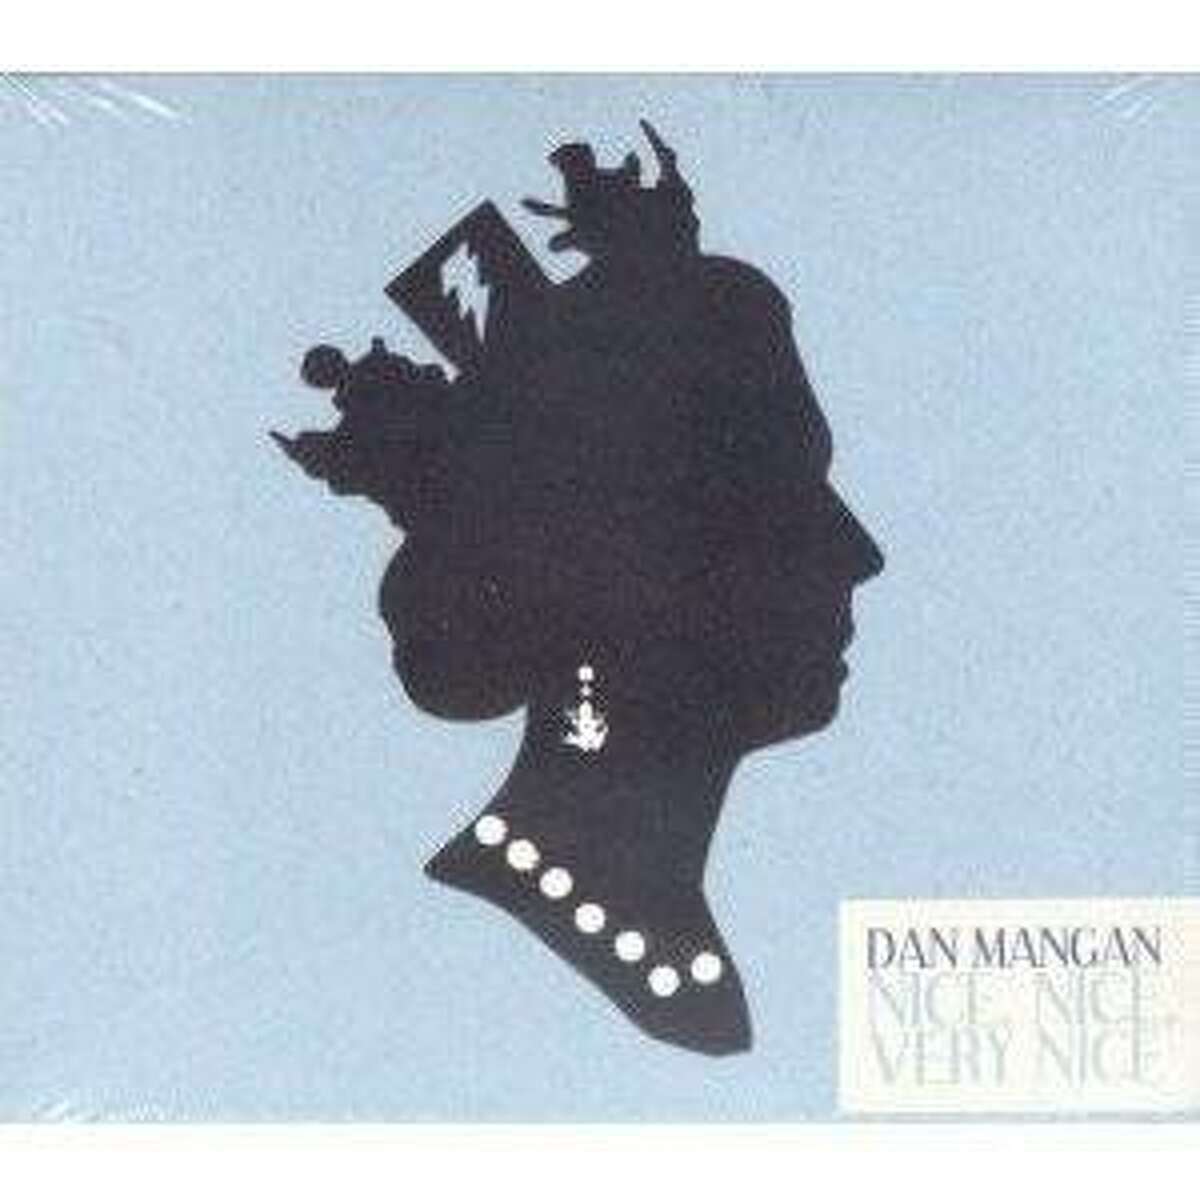 Dan Mangan CD cover: "Nice, Nice, Very Nice."